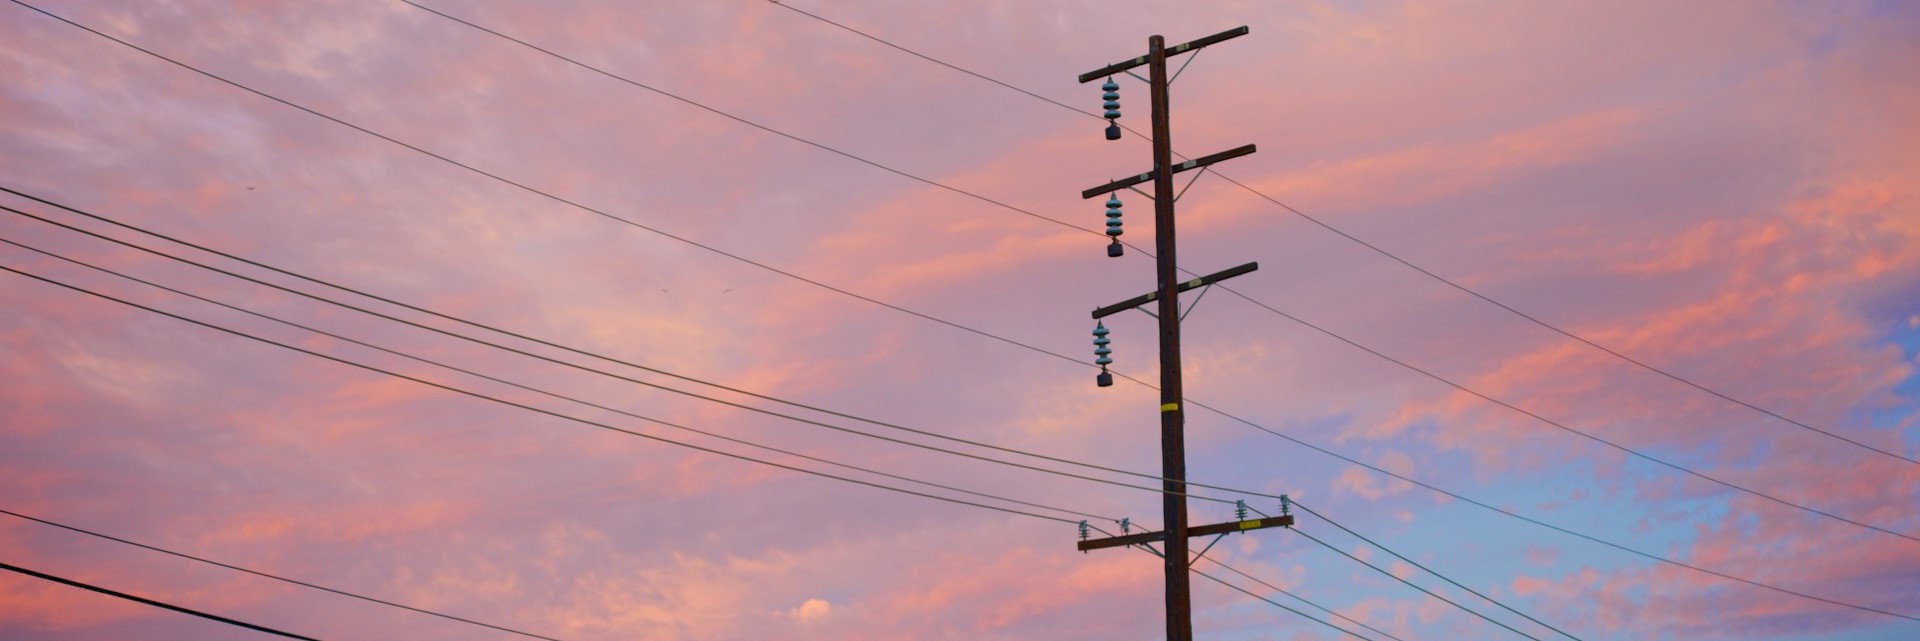 Photo CC0: Kistler, Ken. 'Electric Power Lines At Sunset.'